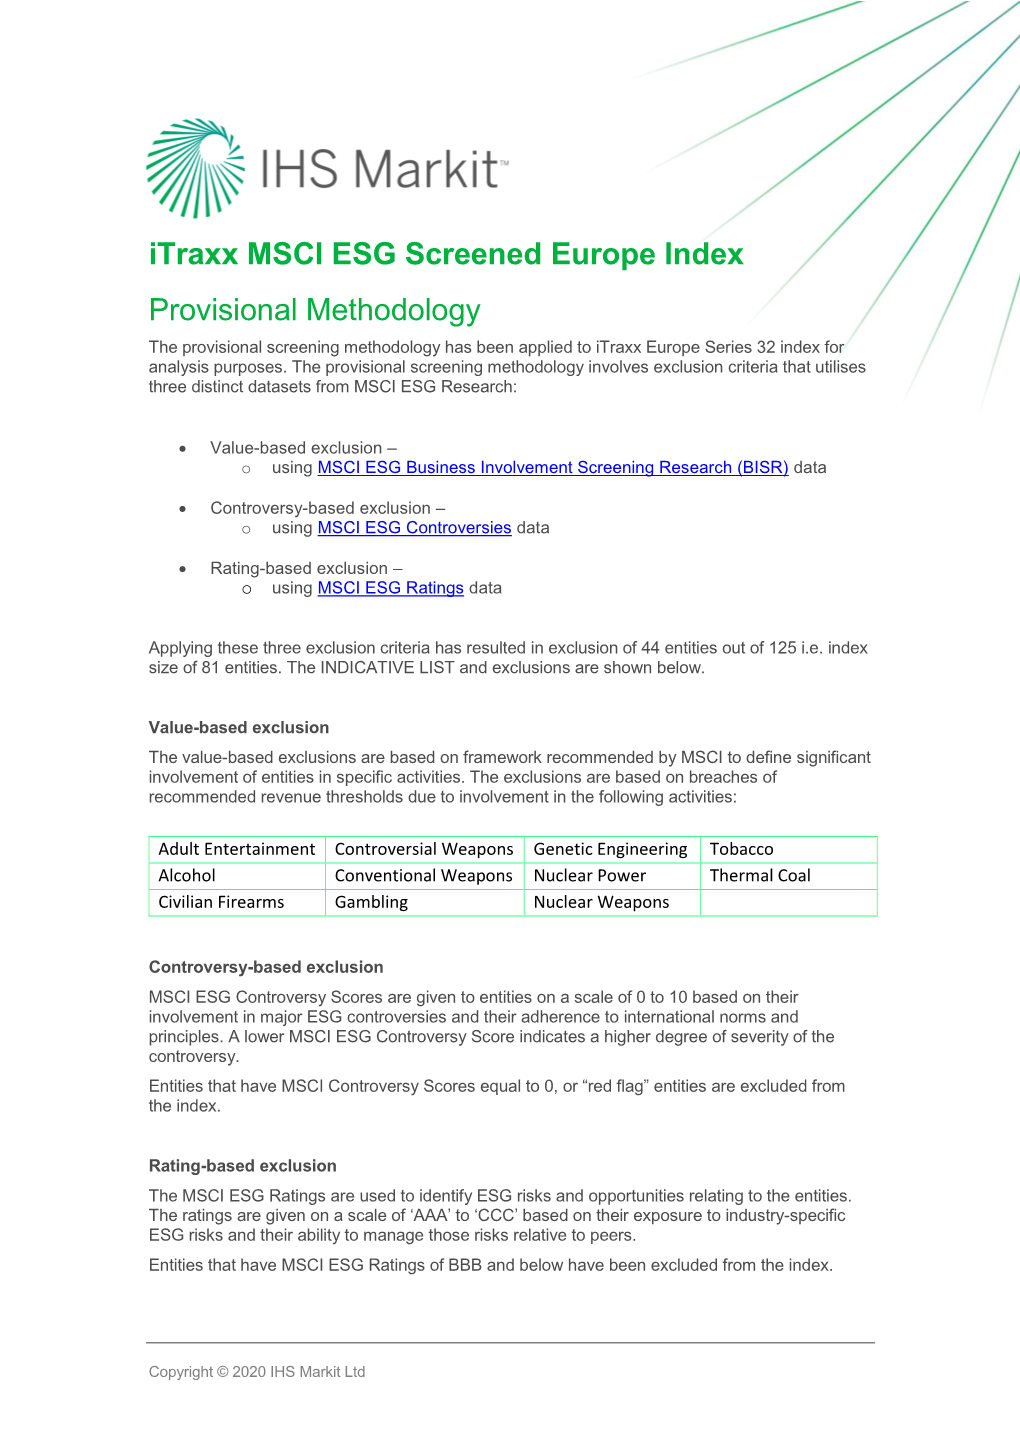 Itraxx MSCI ESG Screened Europe Index Provisional Methodology